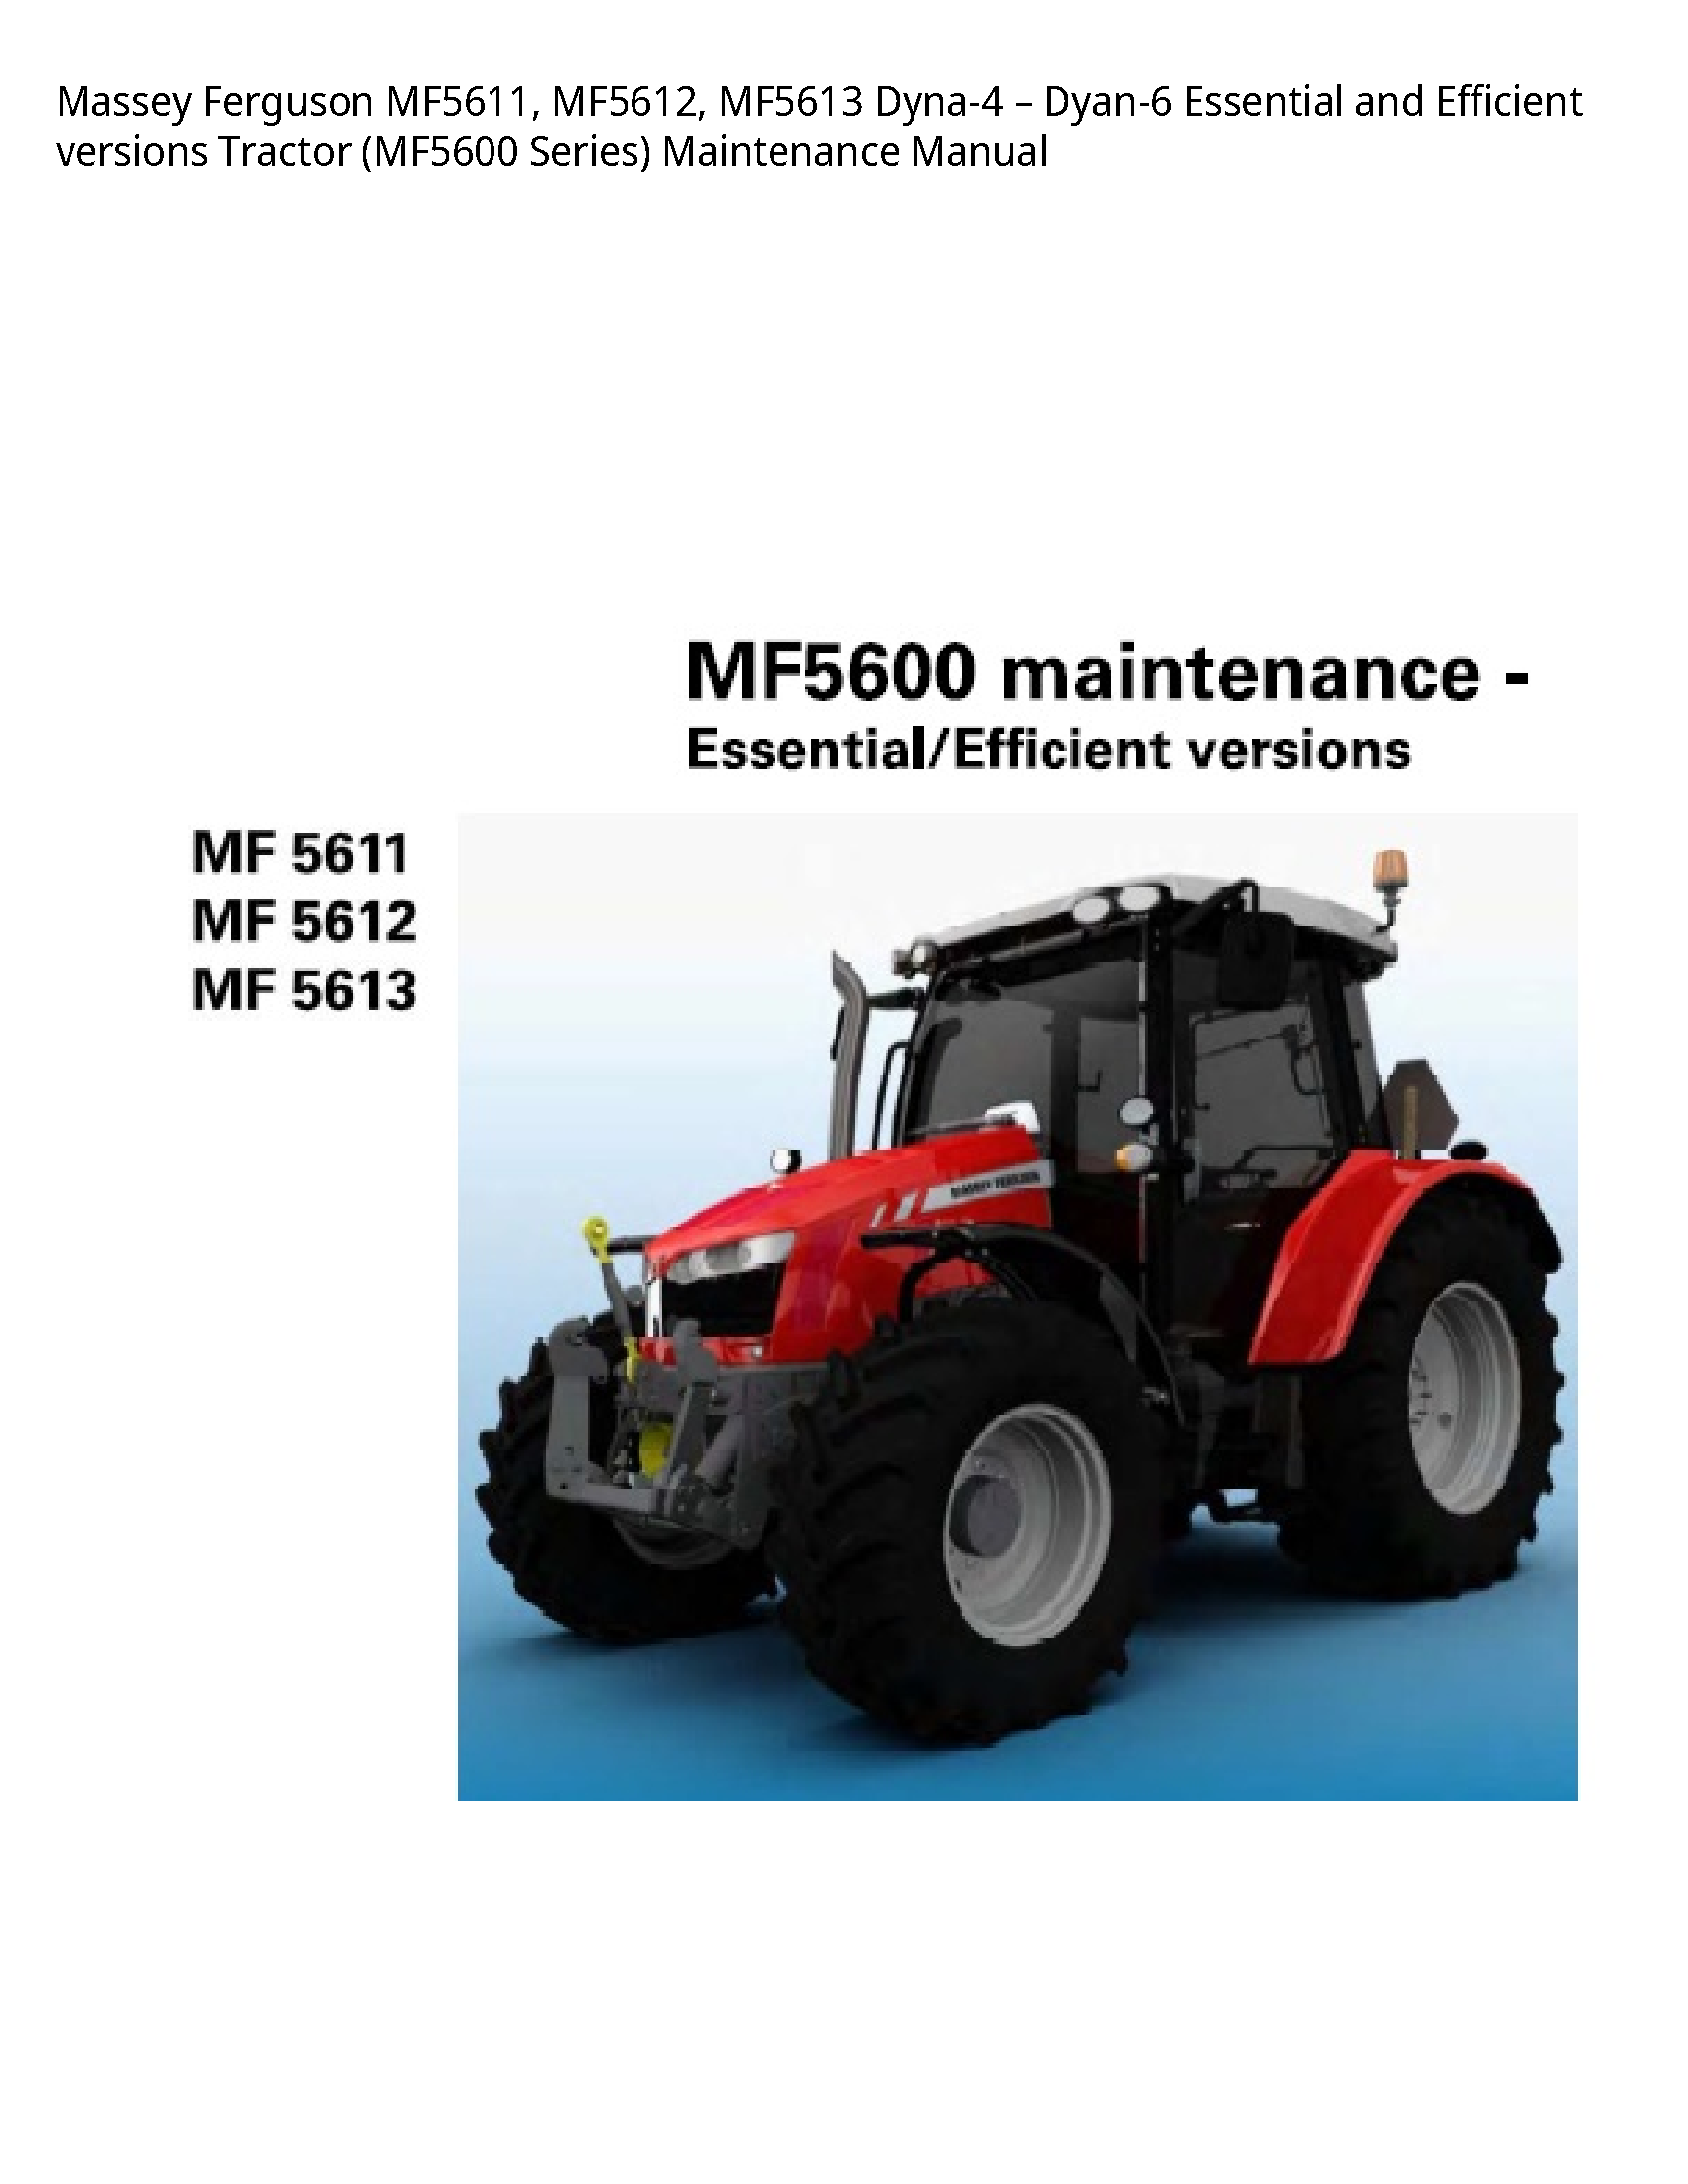 Massey Ferguson MF5611 Essential  Efficient versions Tractor Series) Maintenance manual